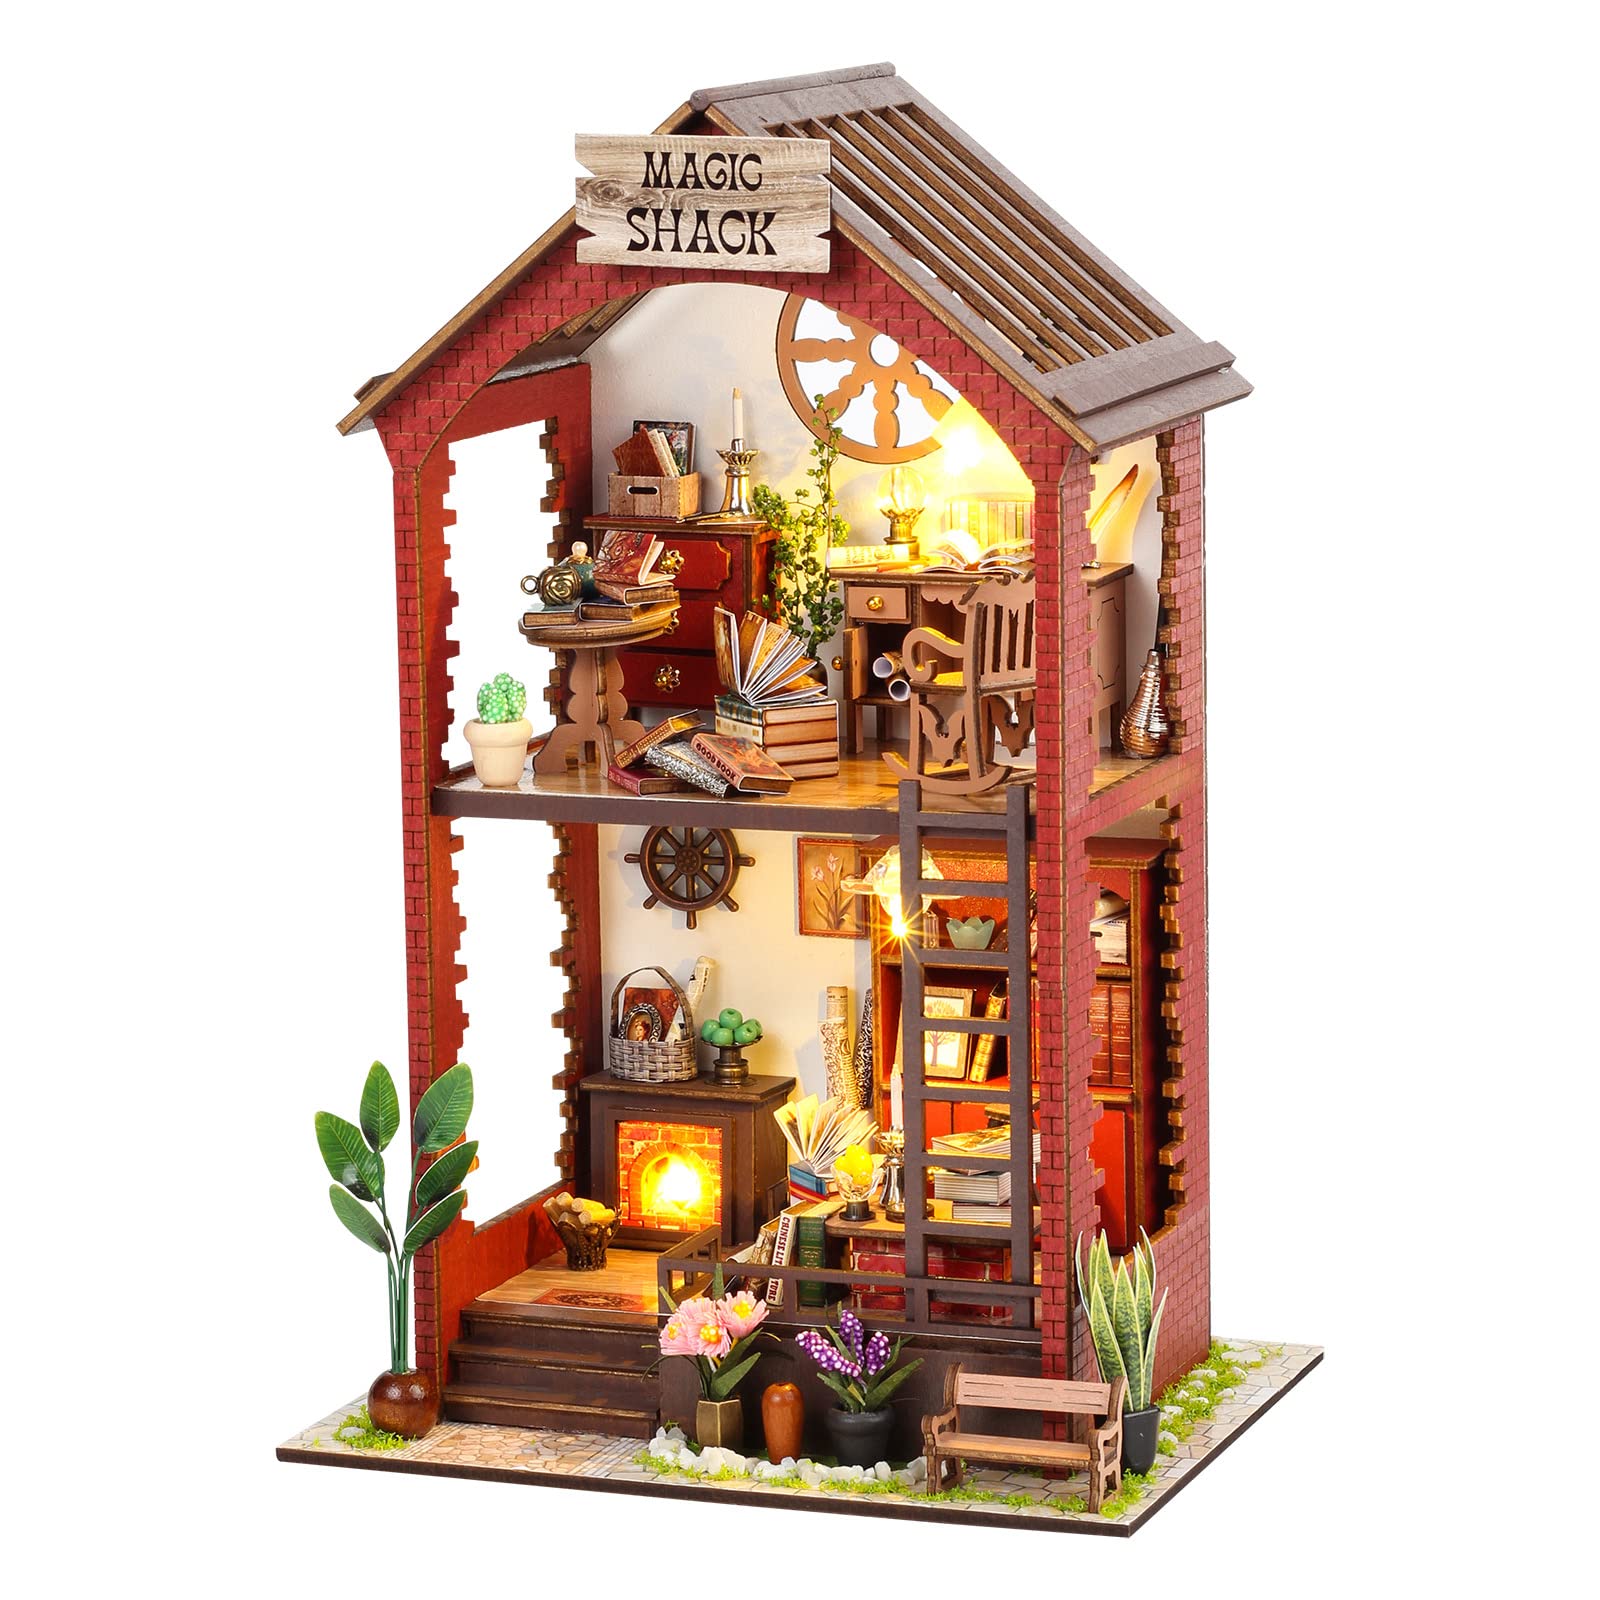 Magic Shack DIY Miniature House-BOOK NOOK WORLD